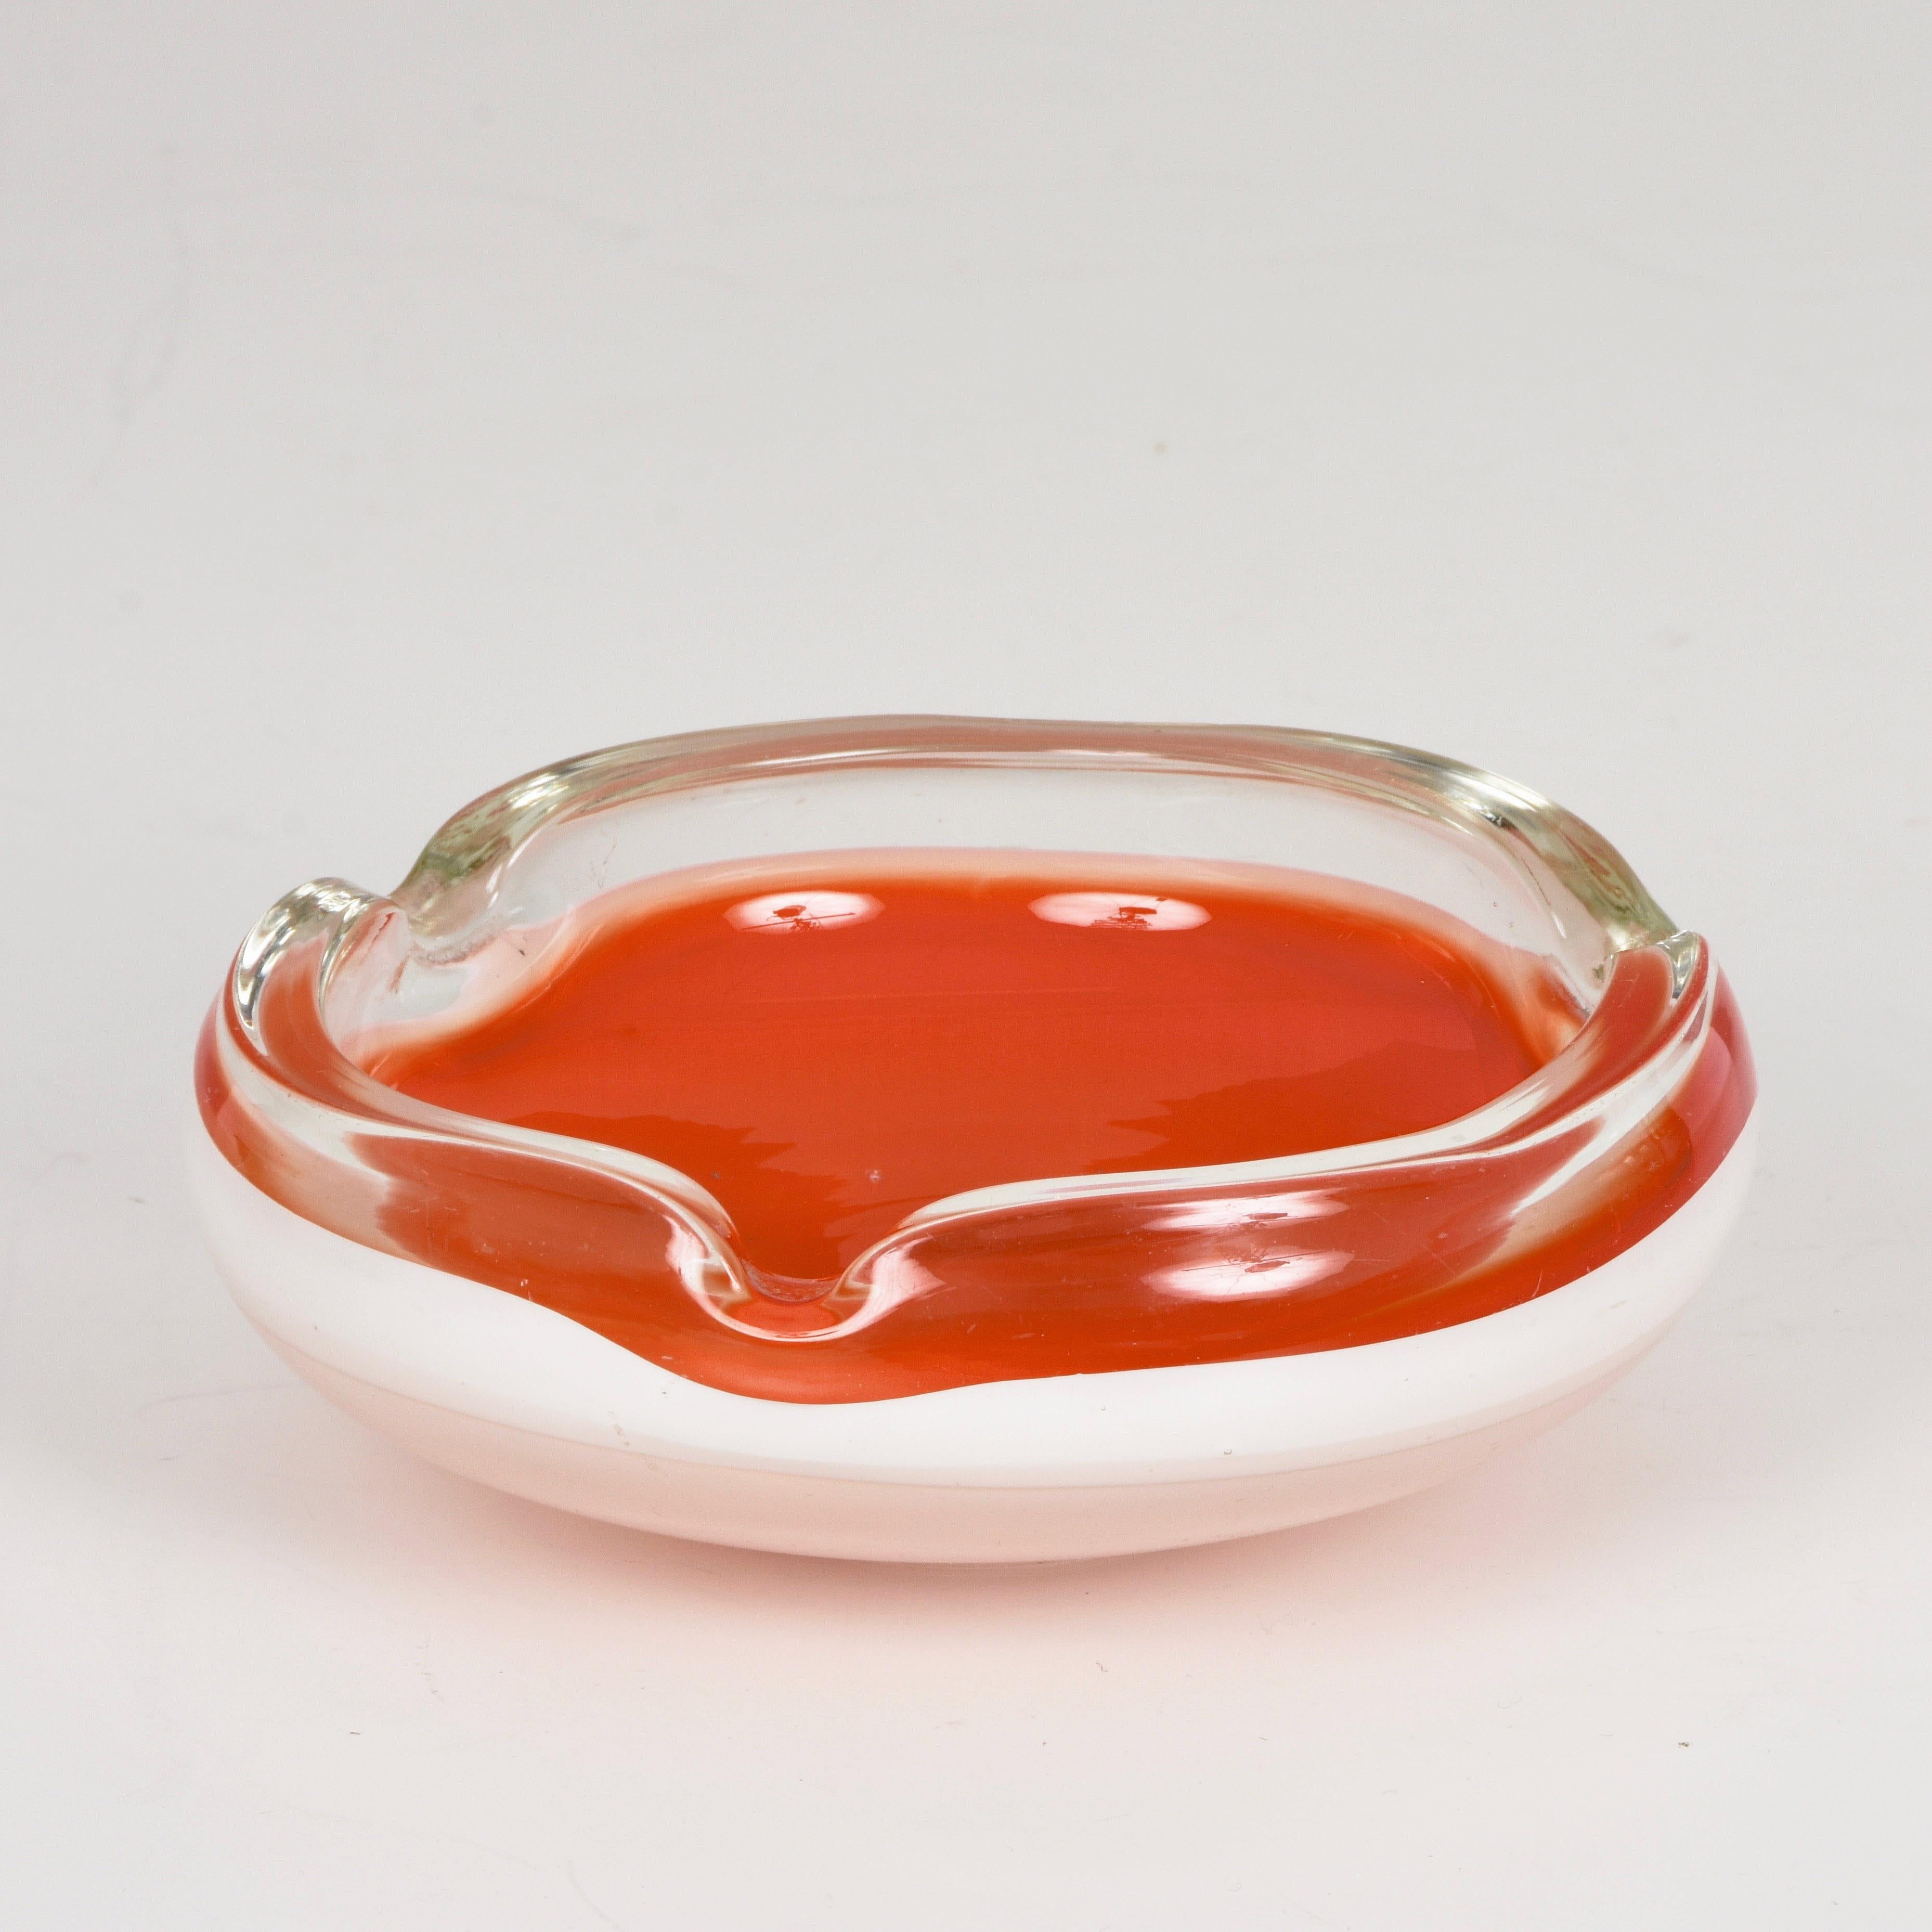 Mid-Century Modern Midcentury Orange and White Murano Glass Italian Bowl or Ashtray, 1960s For Sale